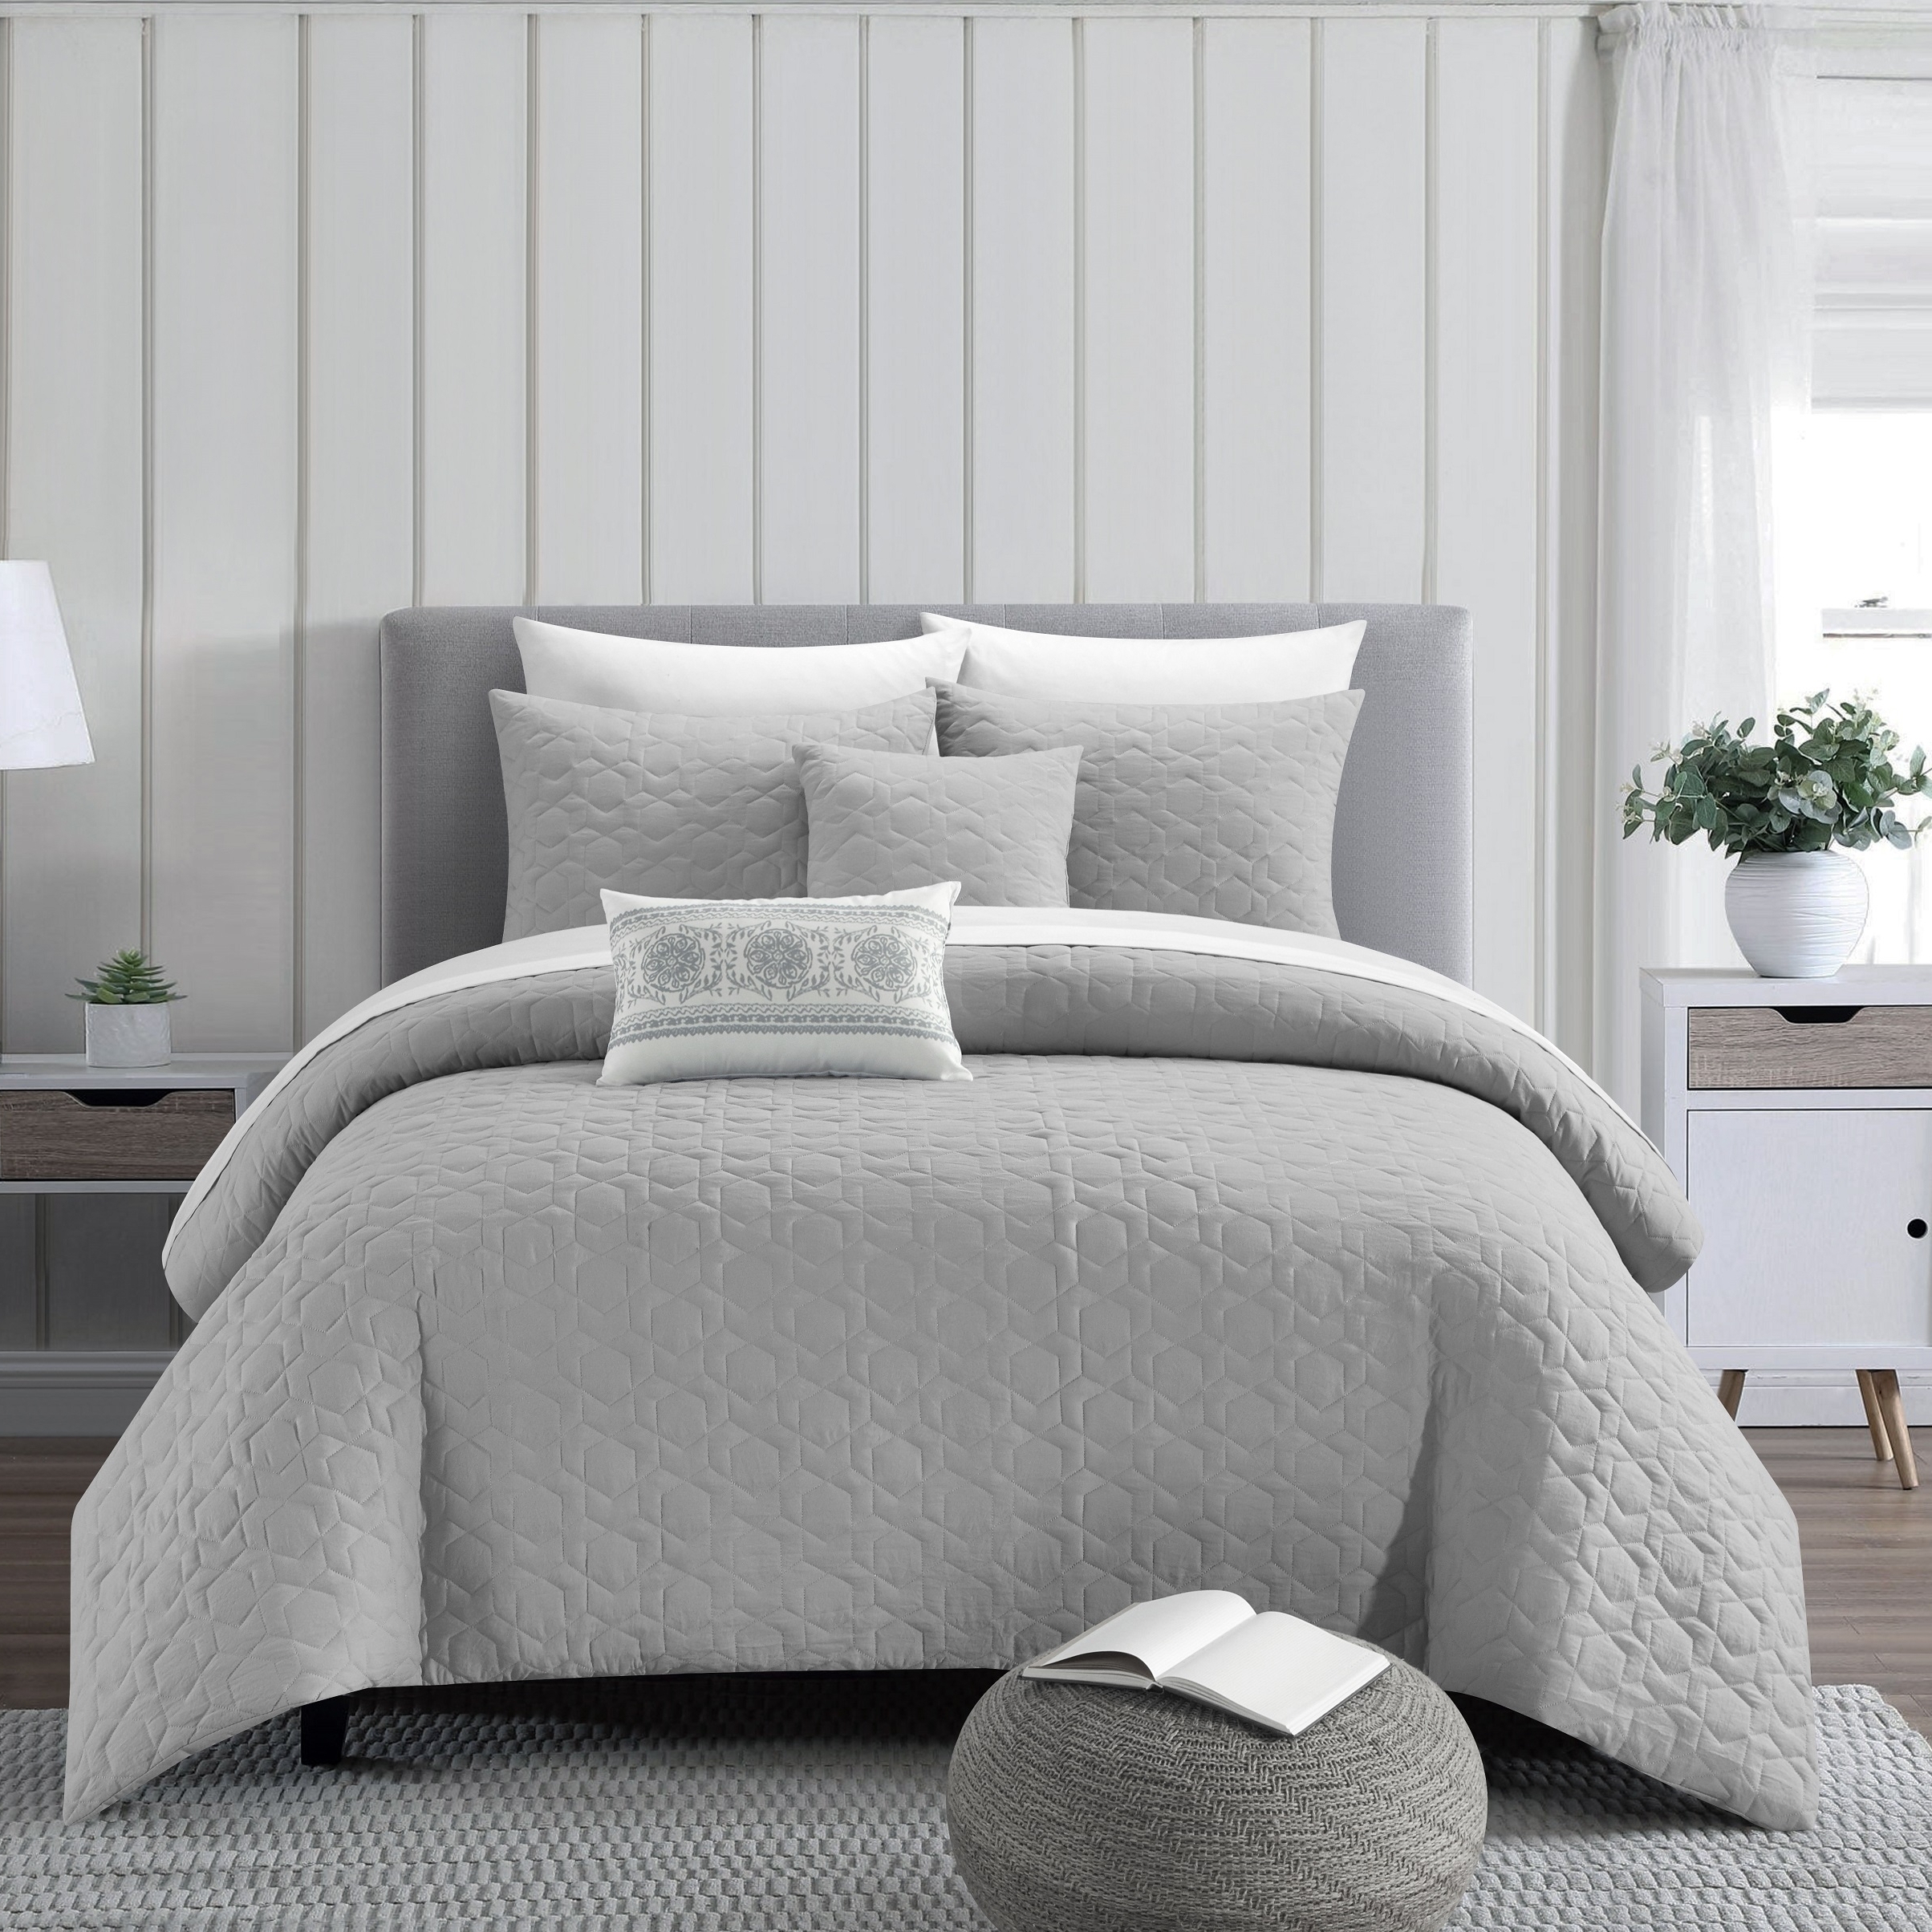 NY&C Home Cavina 5 Piece Comforter Set Geometric Hexagonal Pattern - Grey, Queen